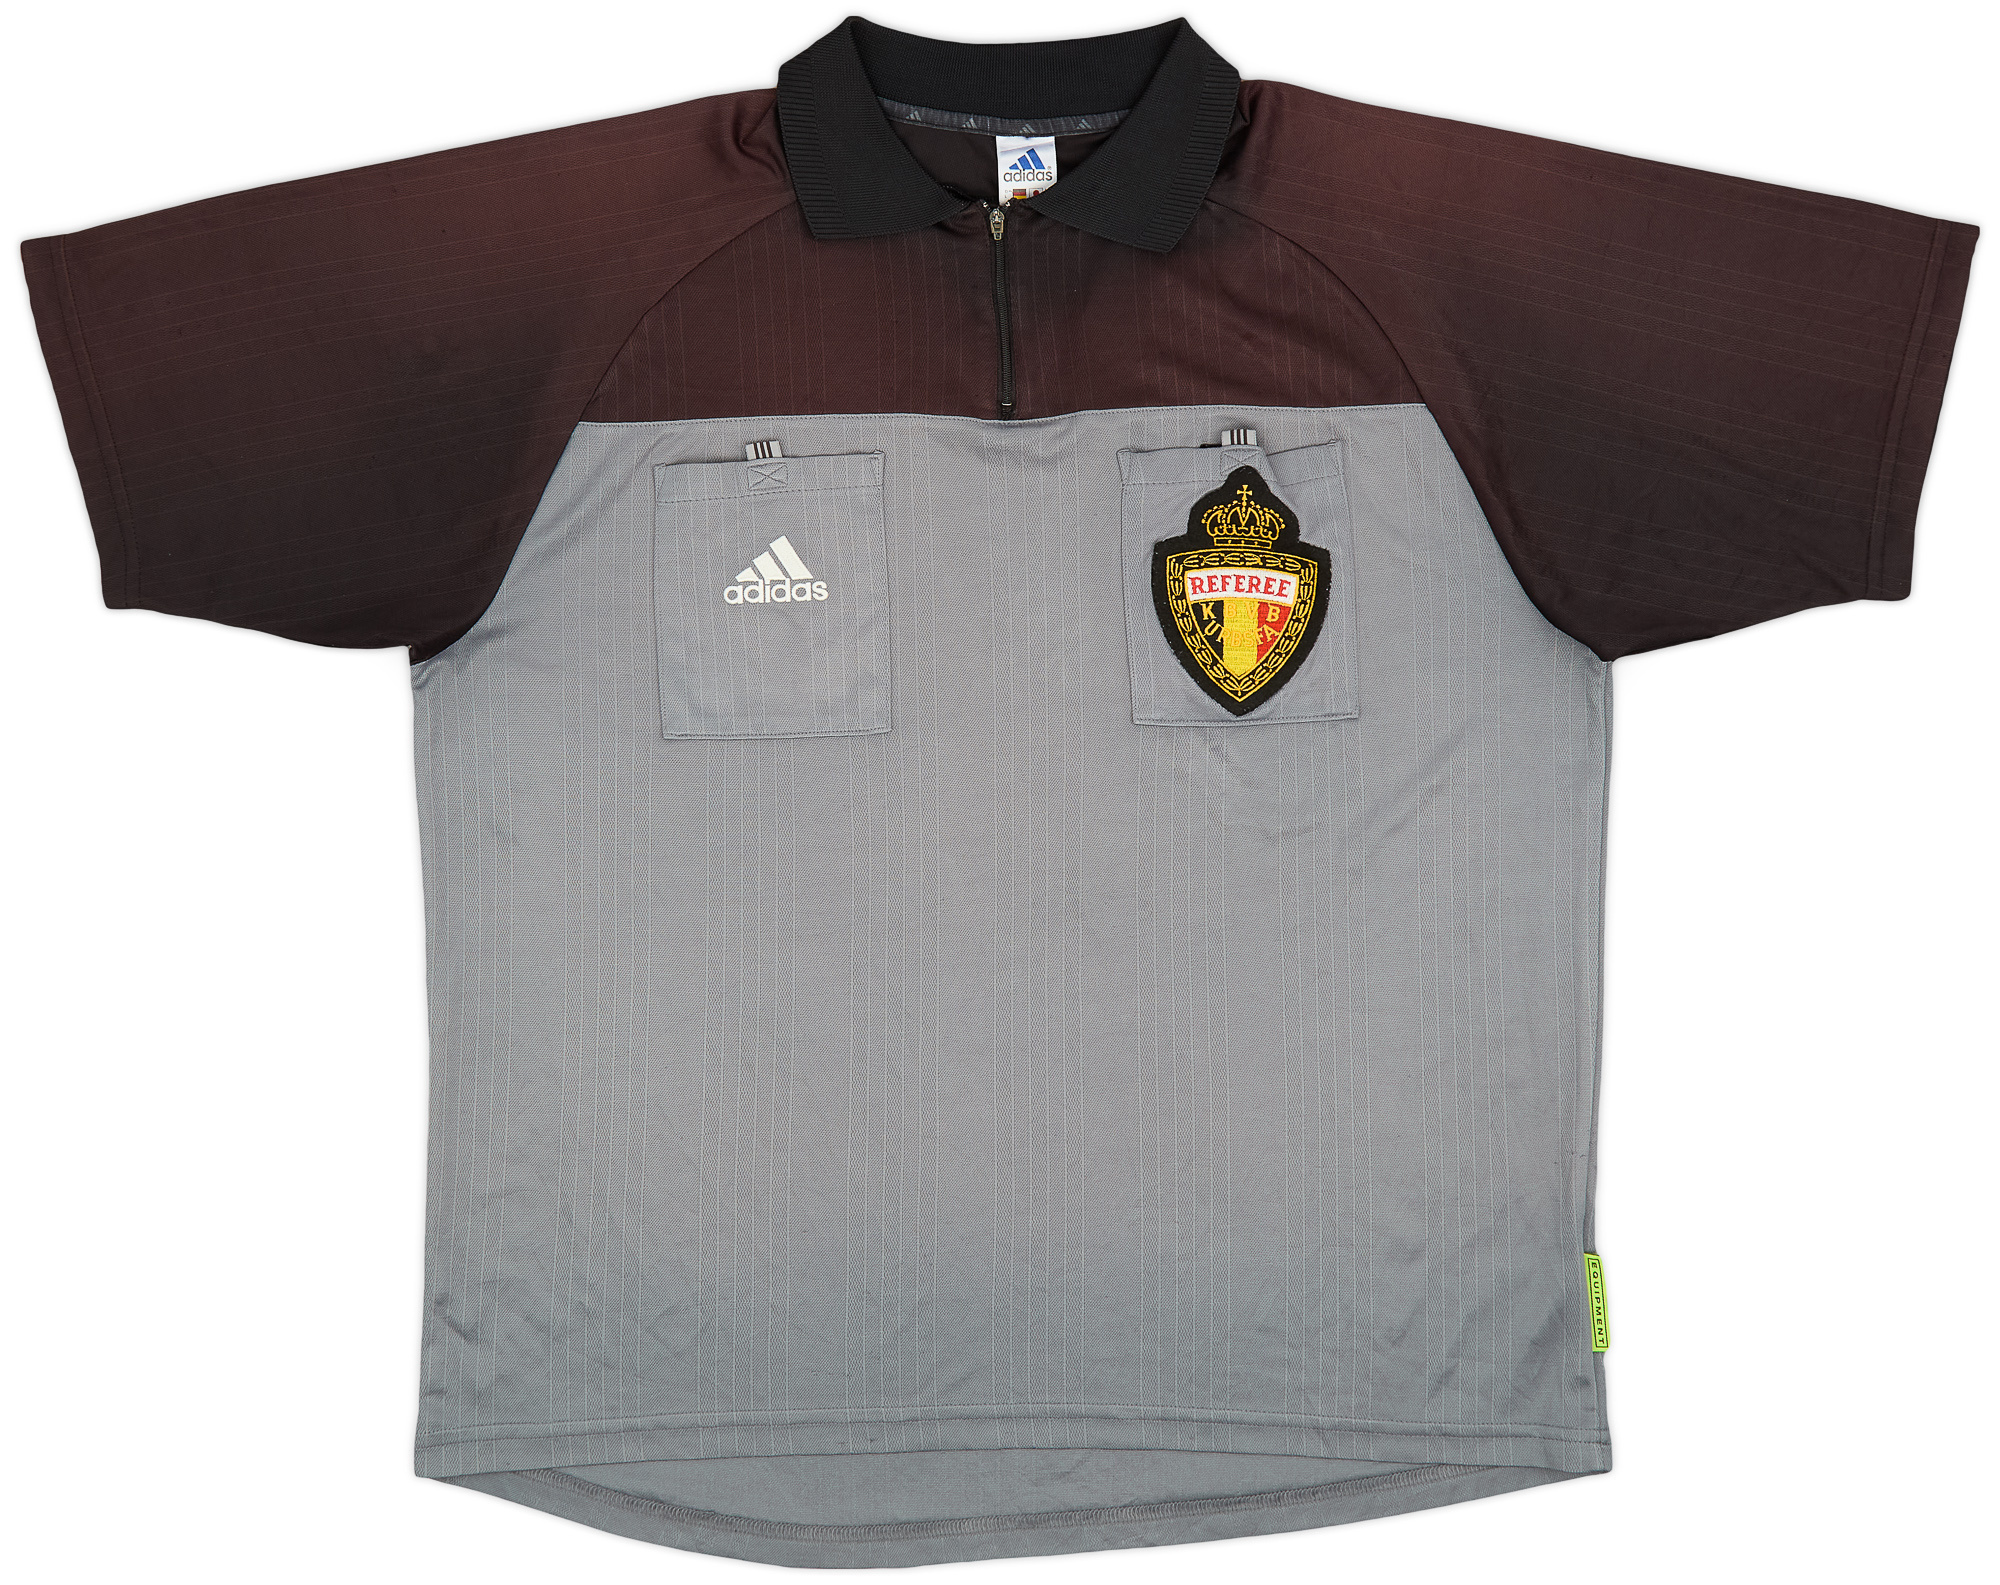 2000-01 adidas Belgium Referee Shirt - 9/10 - ()